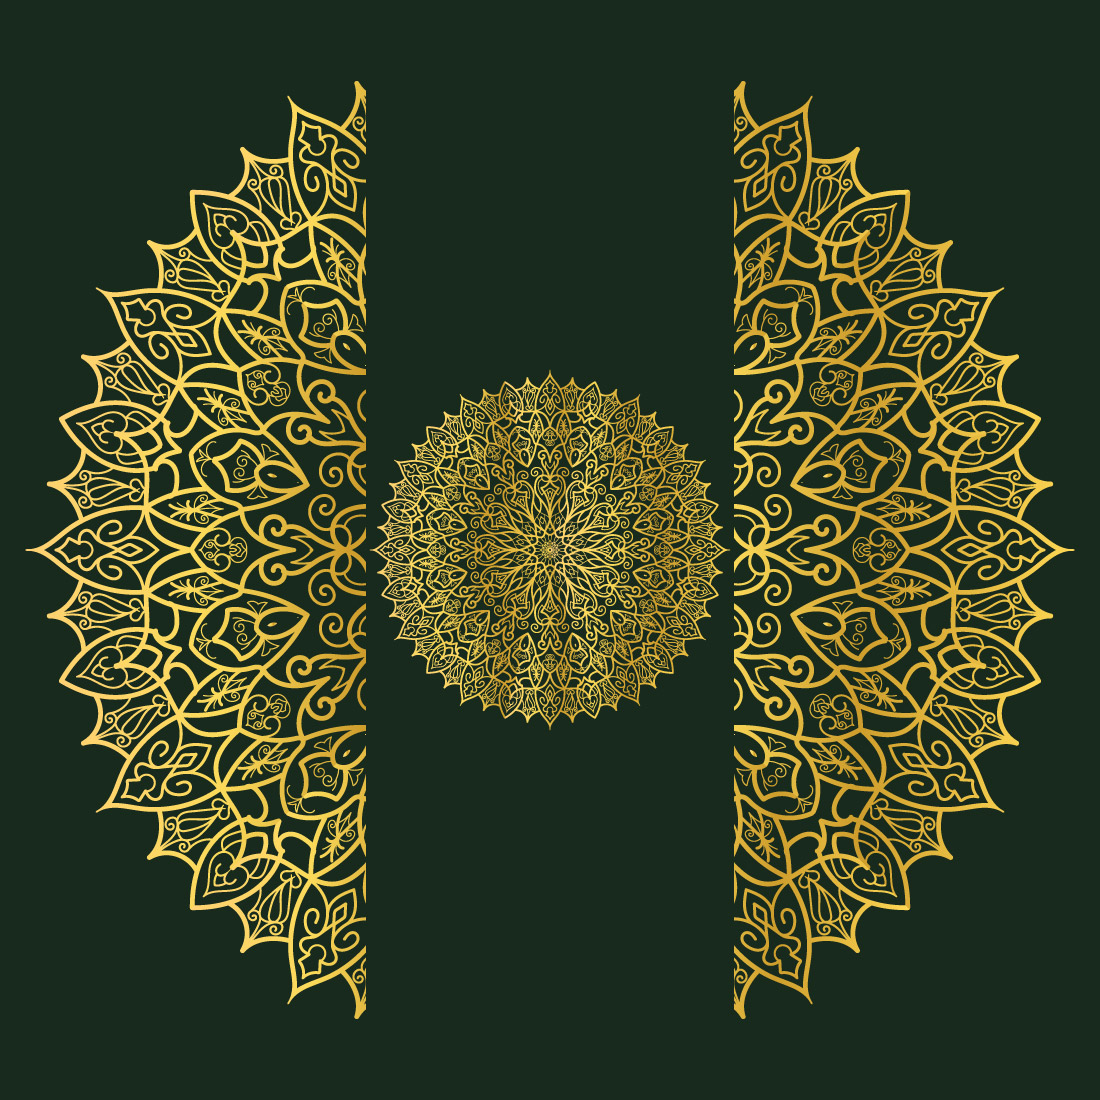 Golden Mandala Templates - 3 (Premium Looking) cover image.